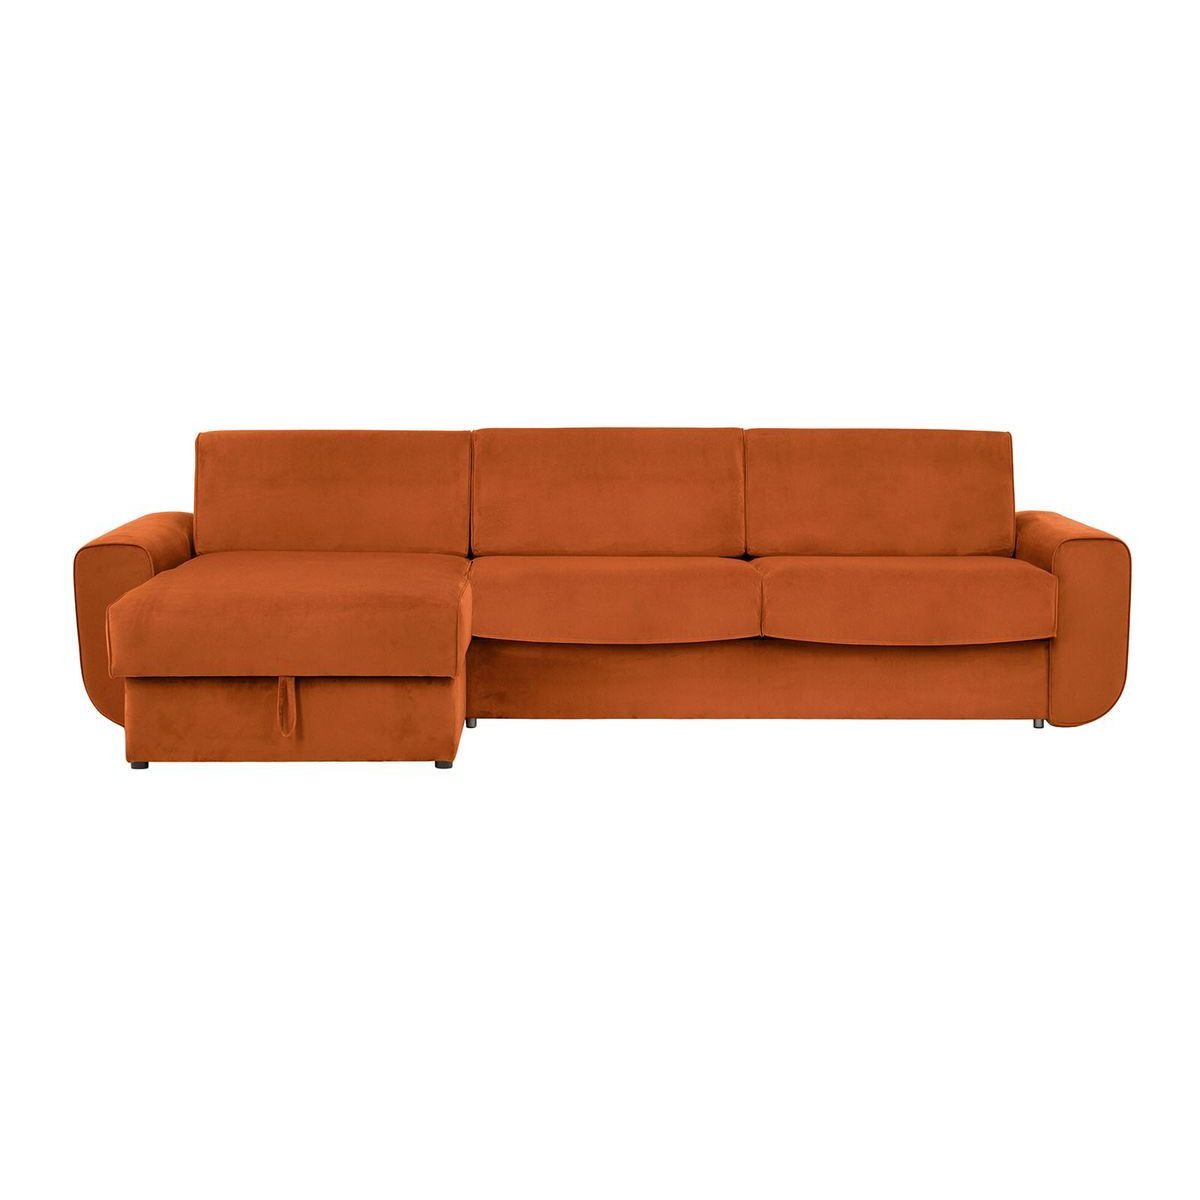 Salsa corner sofa bed with storage, red - image 1